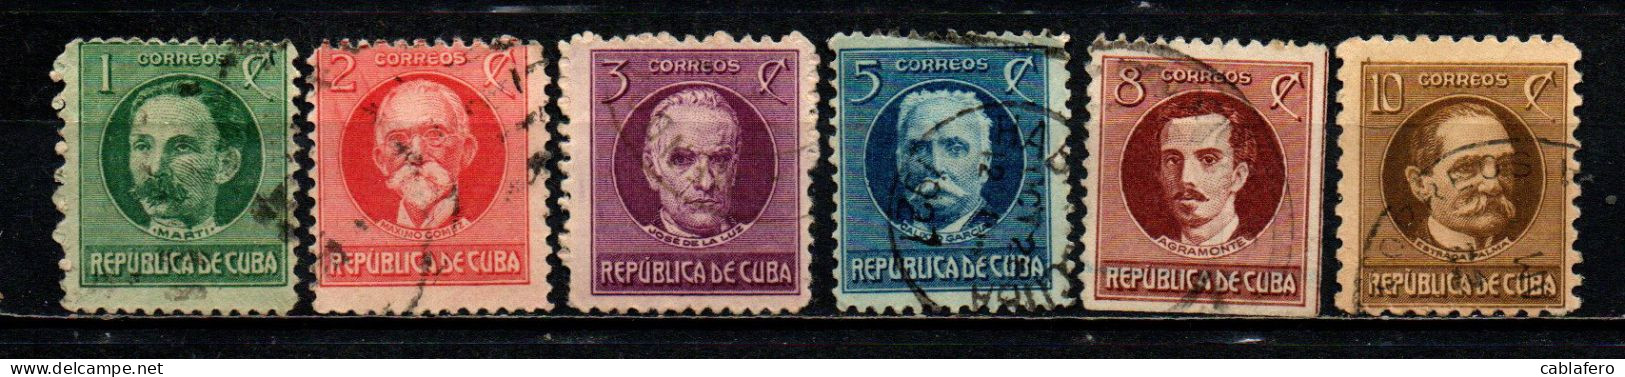 CUBA - 1917 - PERSONALITA' DEL SUDAMERICA: JOSE' MARTI, MAXIMO GOMEZ, JOSE' DE LA LUZ CABALLERO, CALIXTO GARCIA, IGNACIO - Used Stamps